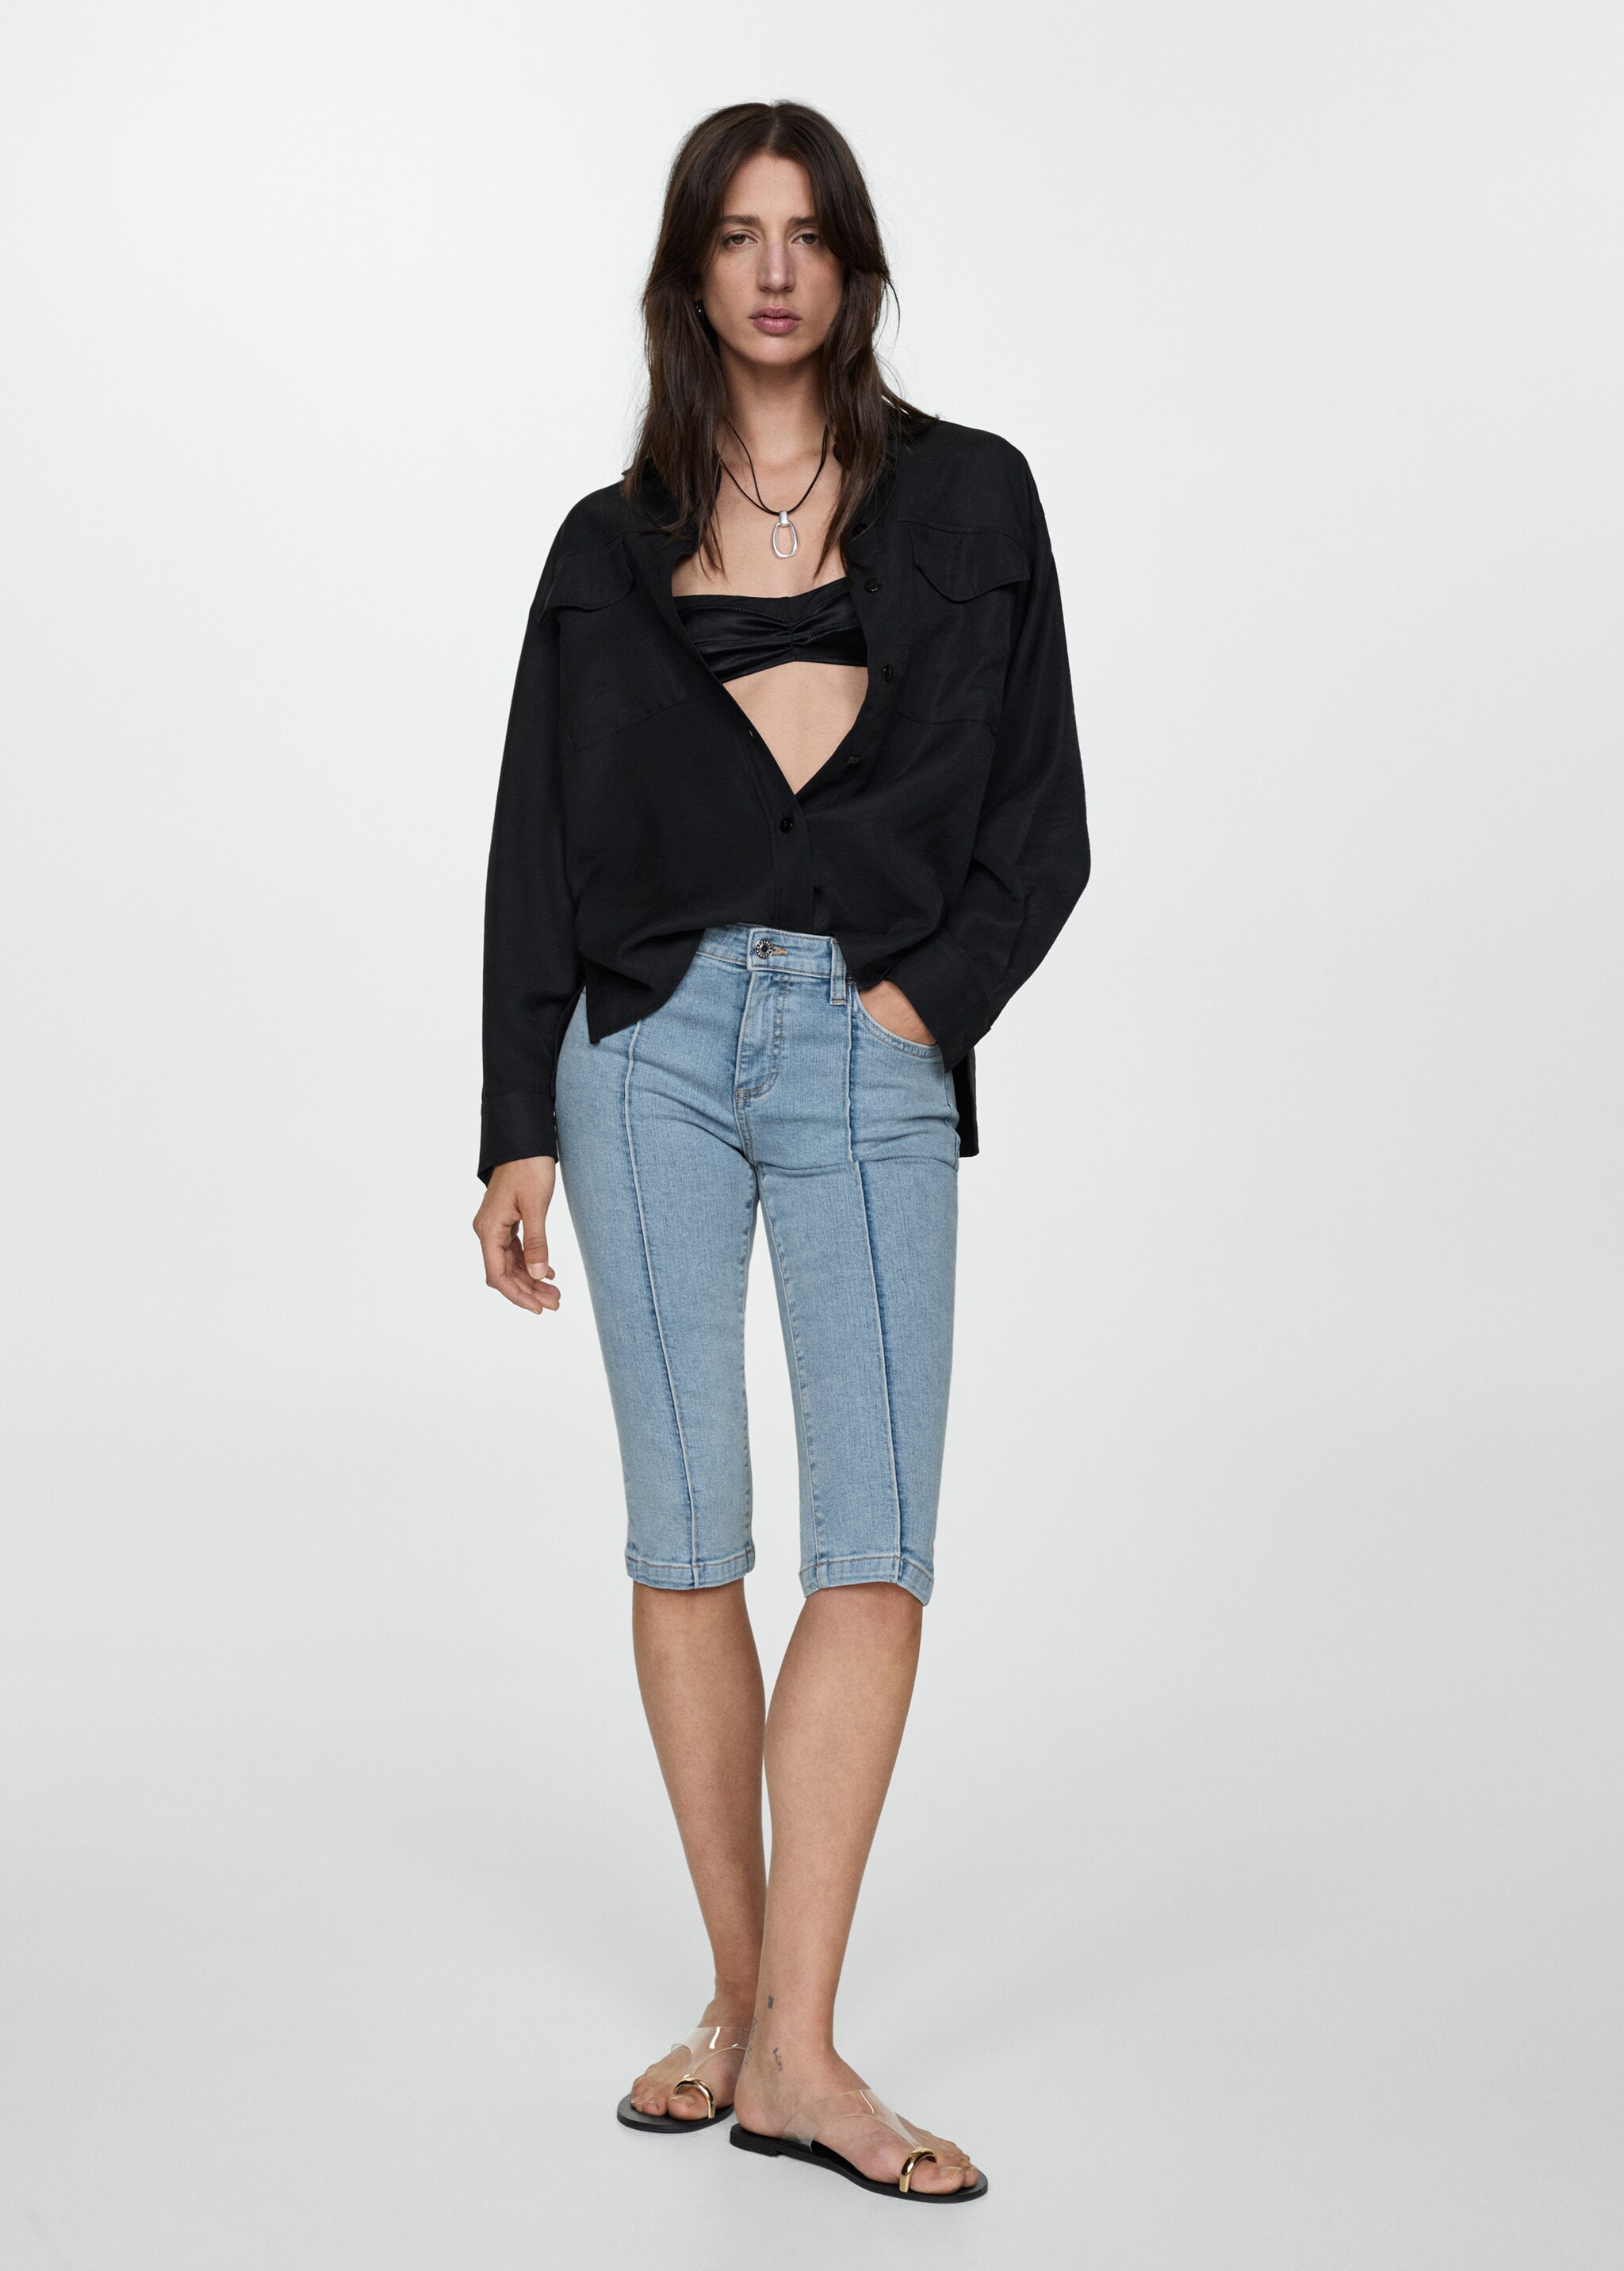 Slim capri jeans with decorative stitching - Общий план